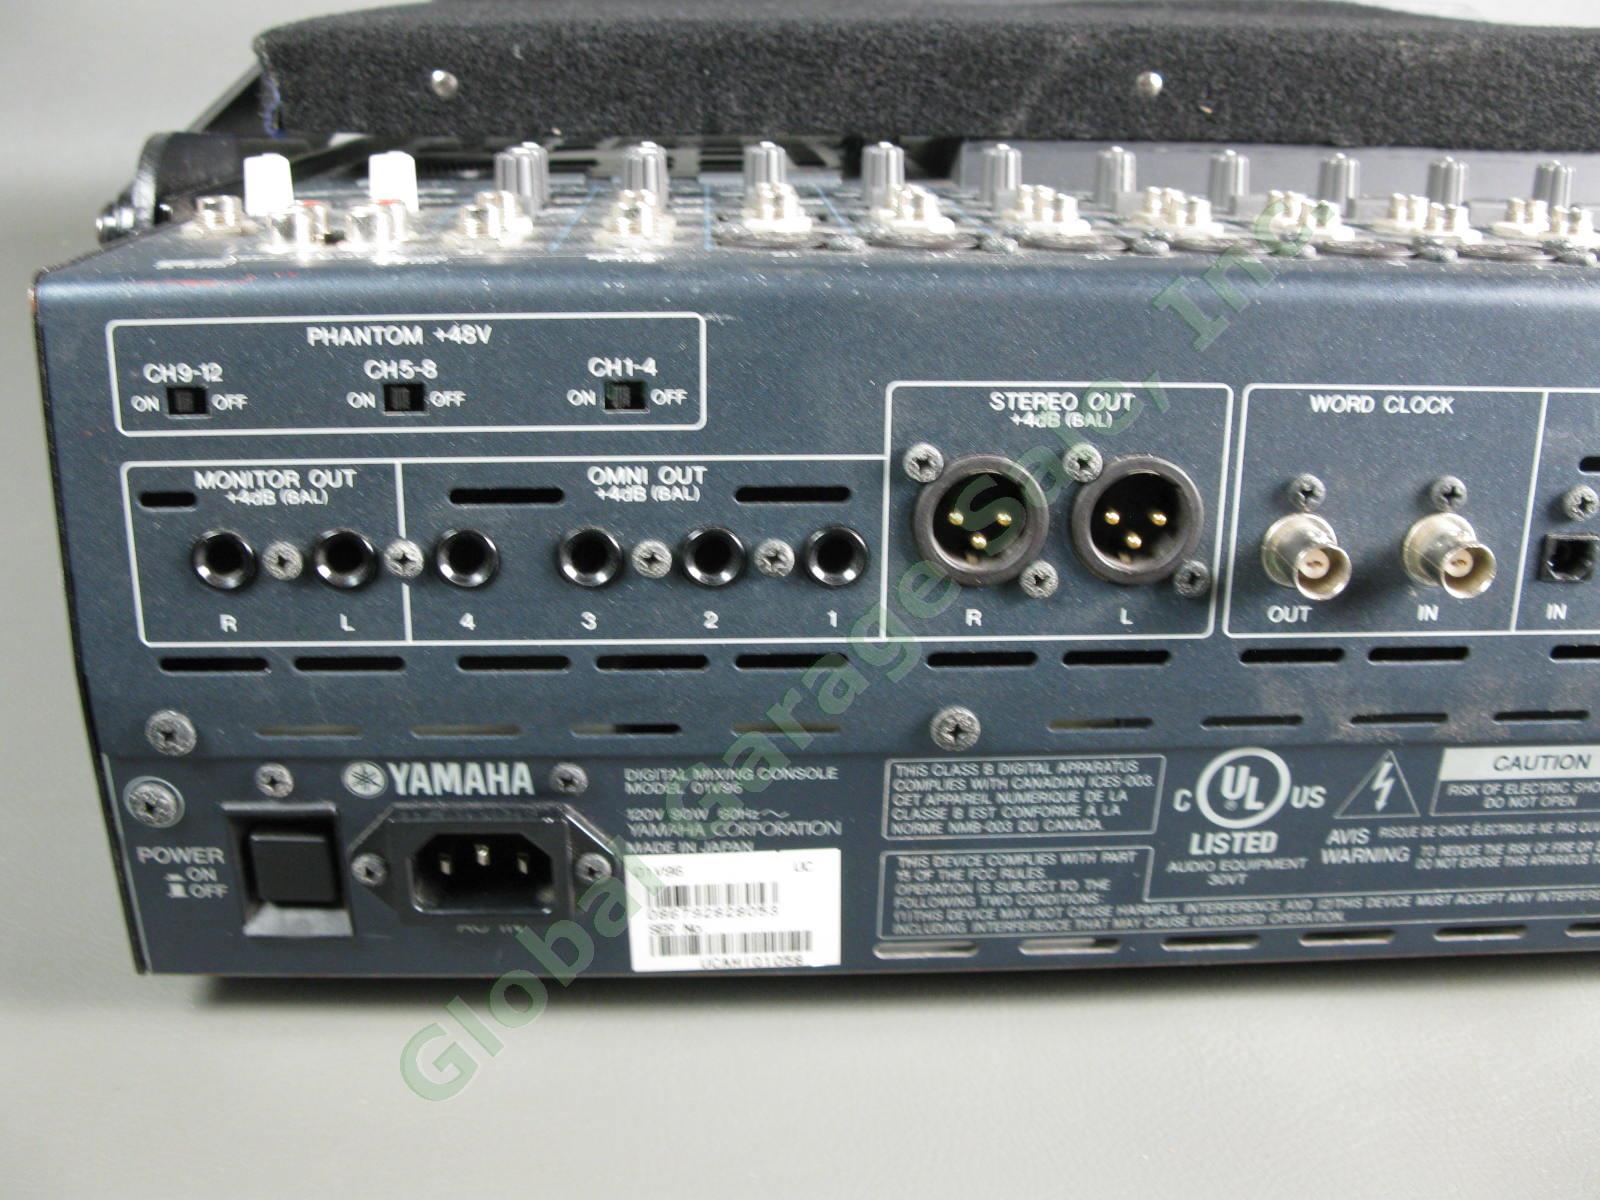 Yamaha 01V96 Digital Live Studio Mixing Console Mixer w/Gator Road Case & Manual 6